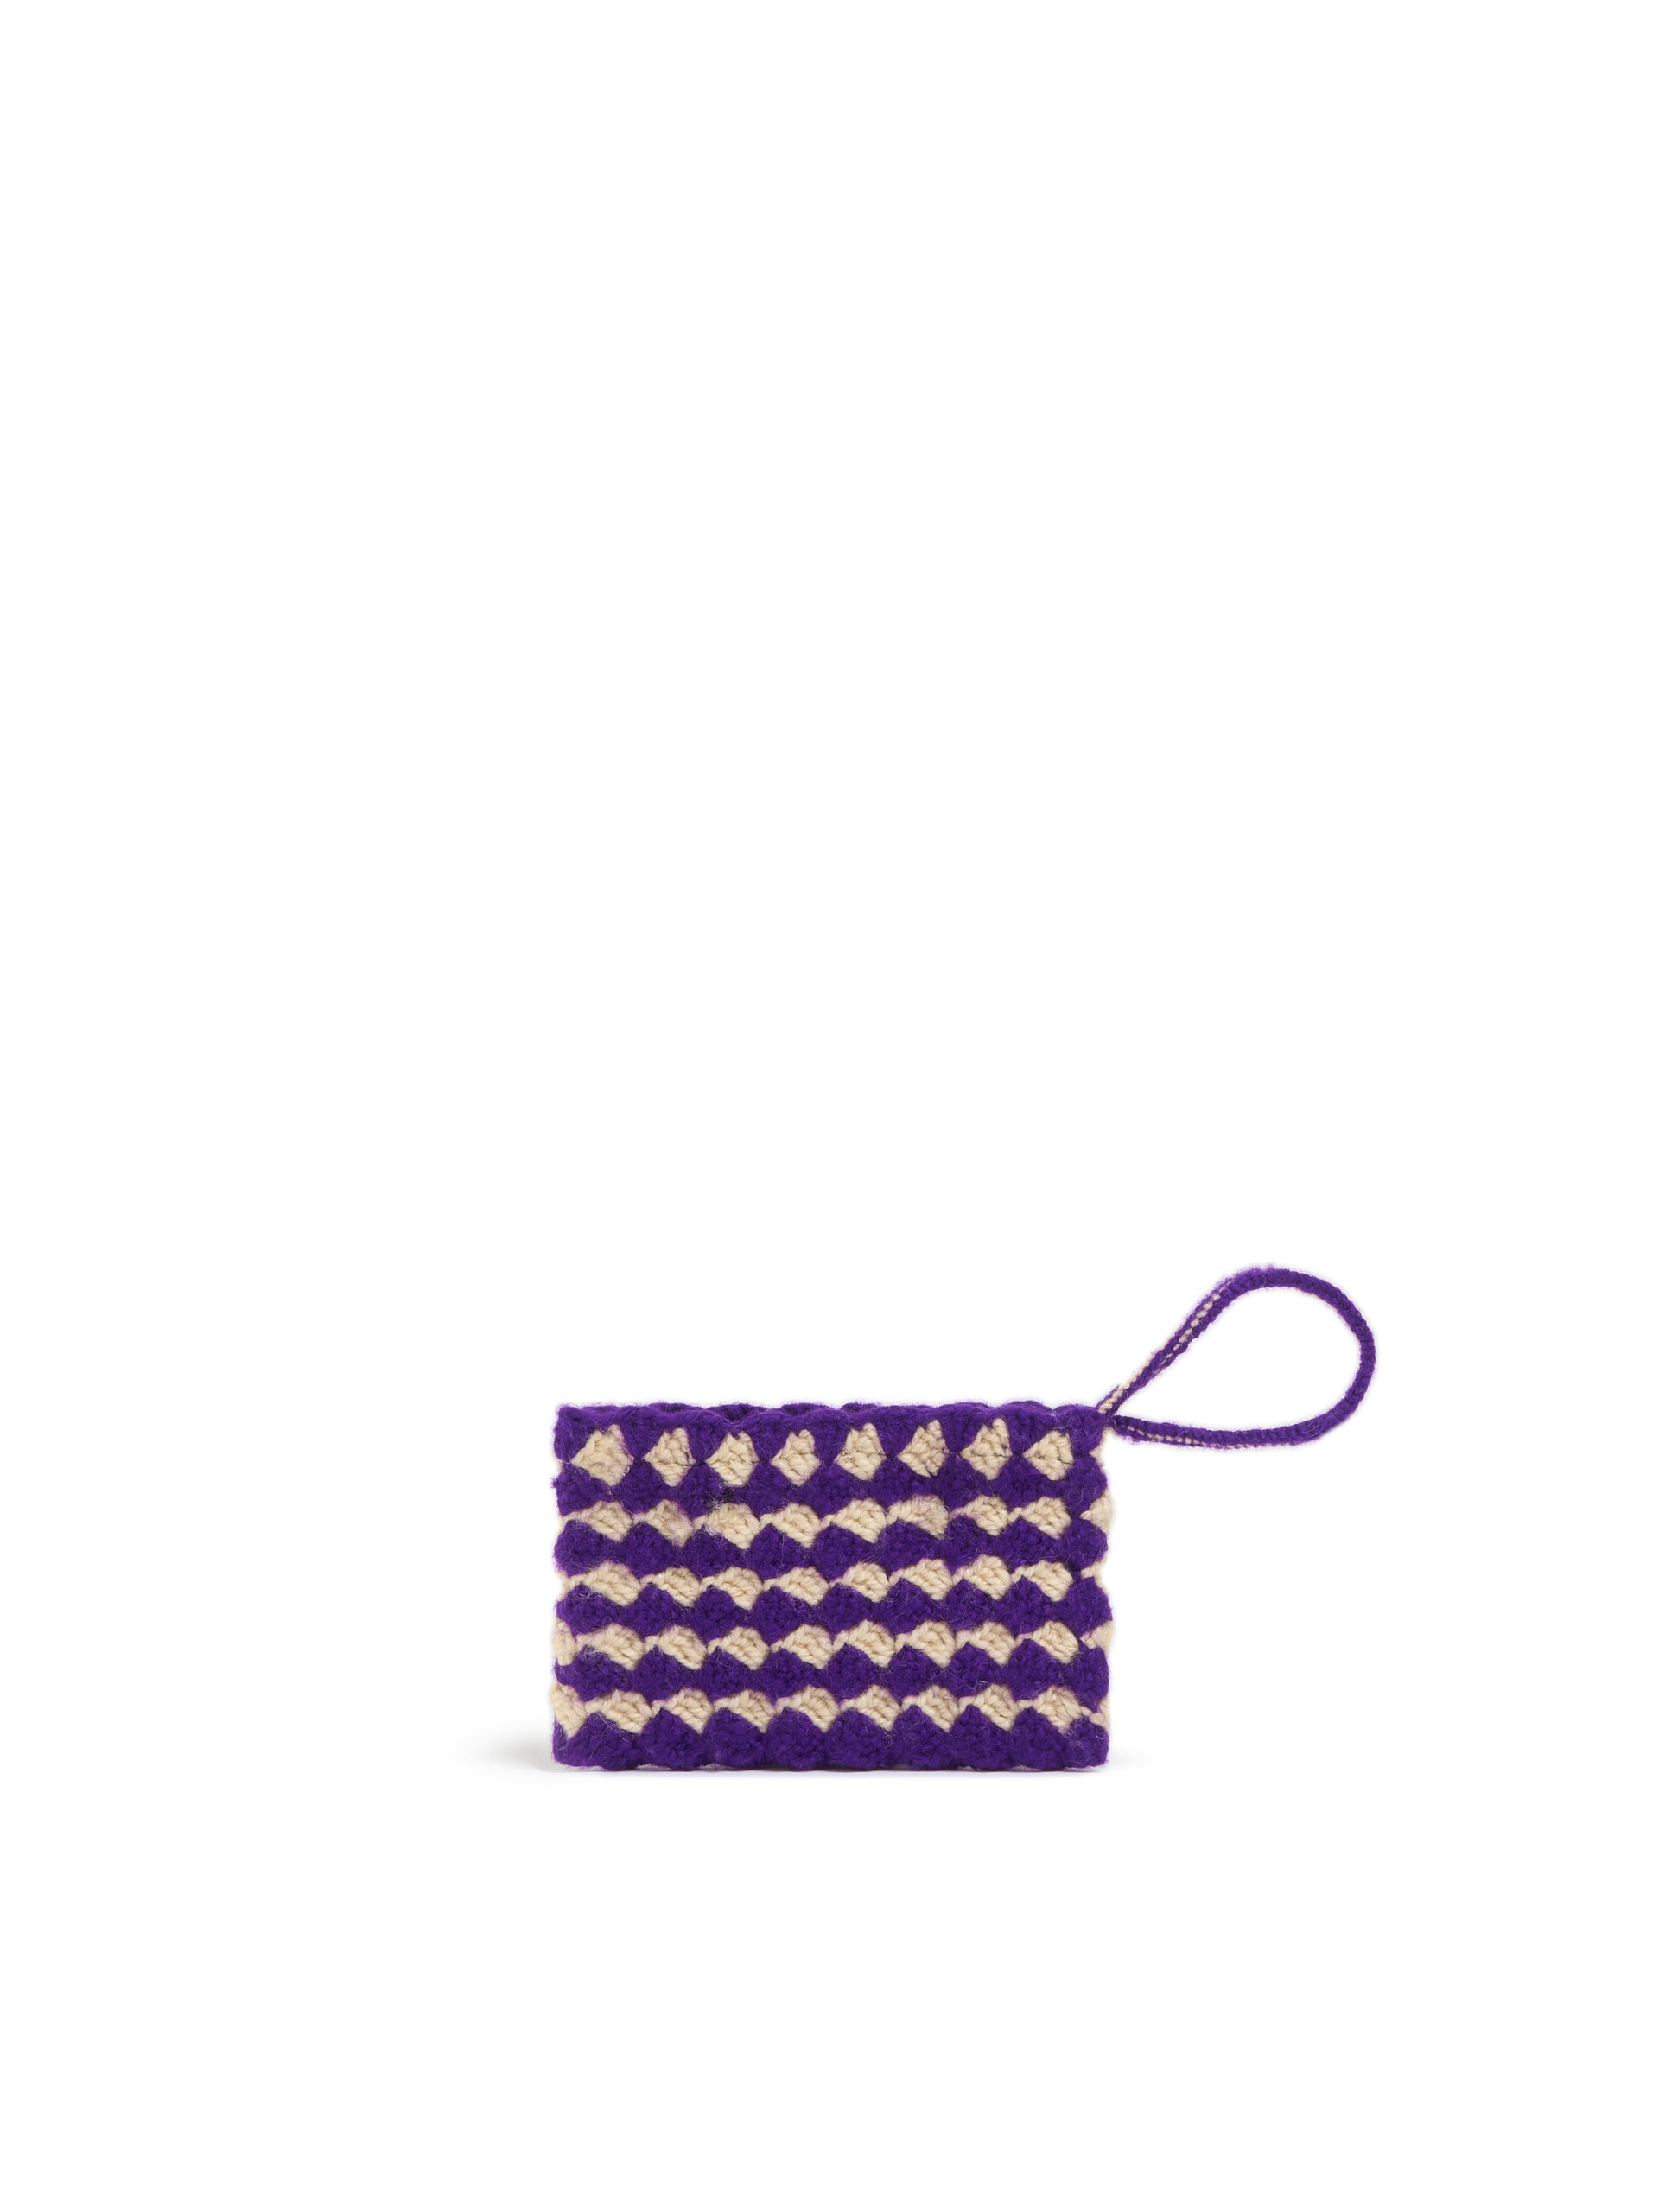 Black Crochet Marni Market Medium Chessboard Pouch - Accessories - Image 2